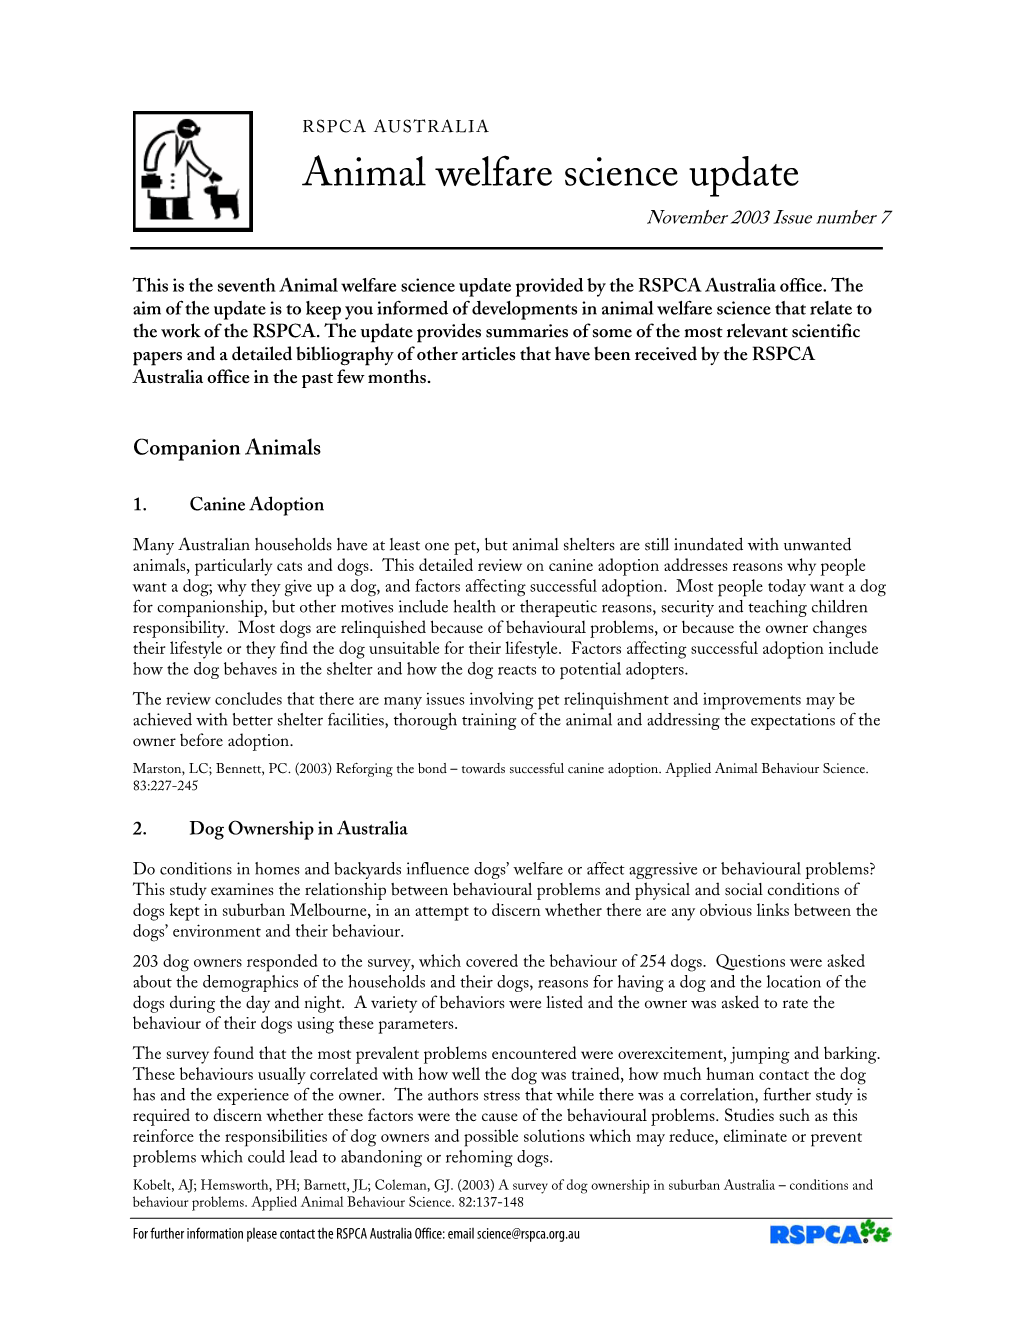 Animal Welfare Science Update November 2003 Issue Number 7